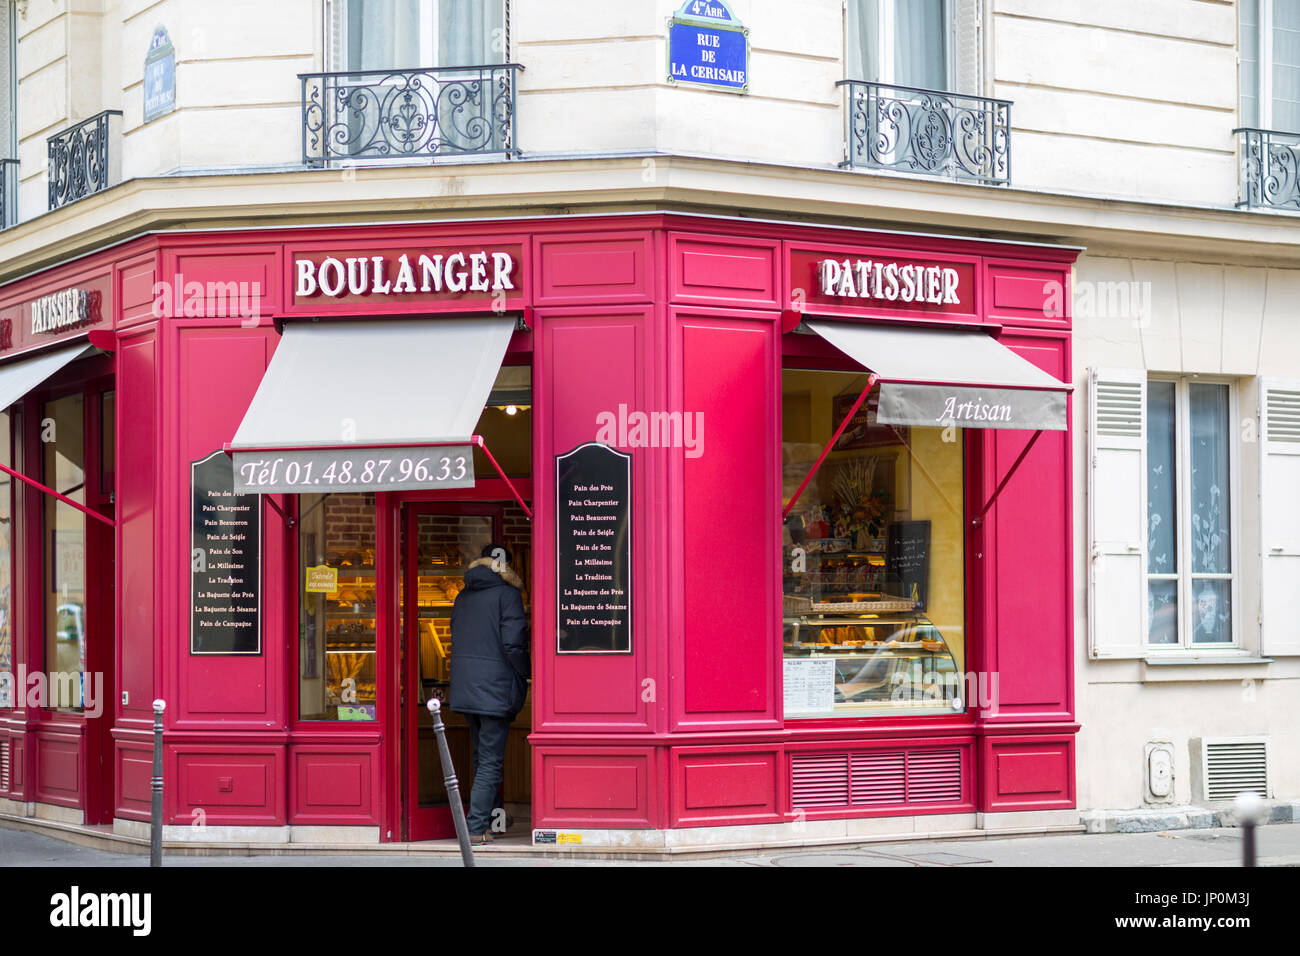 Paris, France - March 2, 2016: Man entering red bakery and pastry shop on the corner of rue du Petit Musc and rue de la Cerisaie in the Marais, Paris. Stock Photo